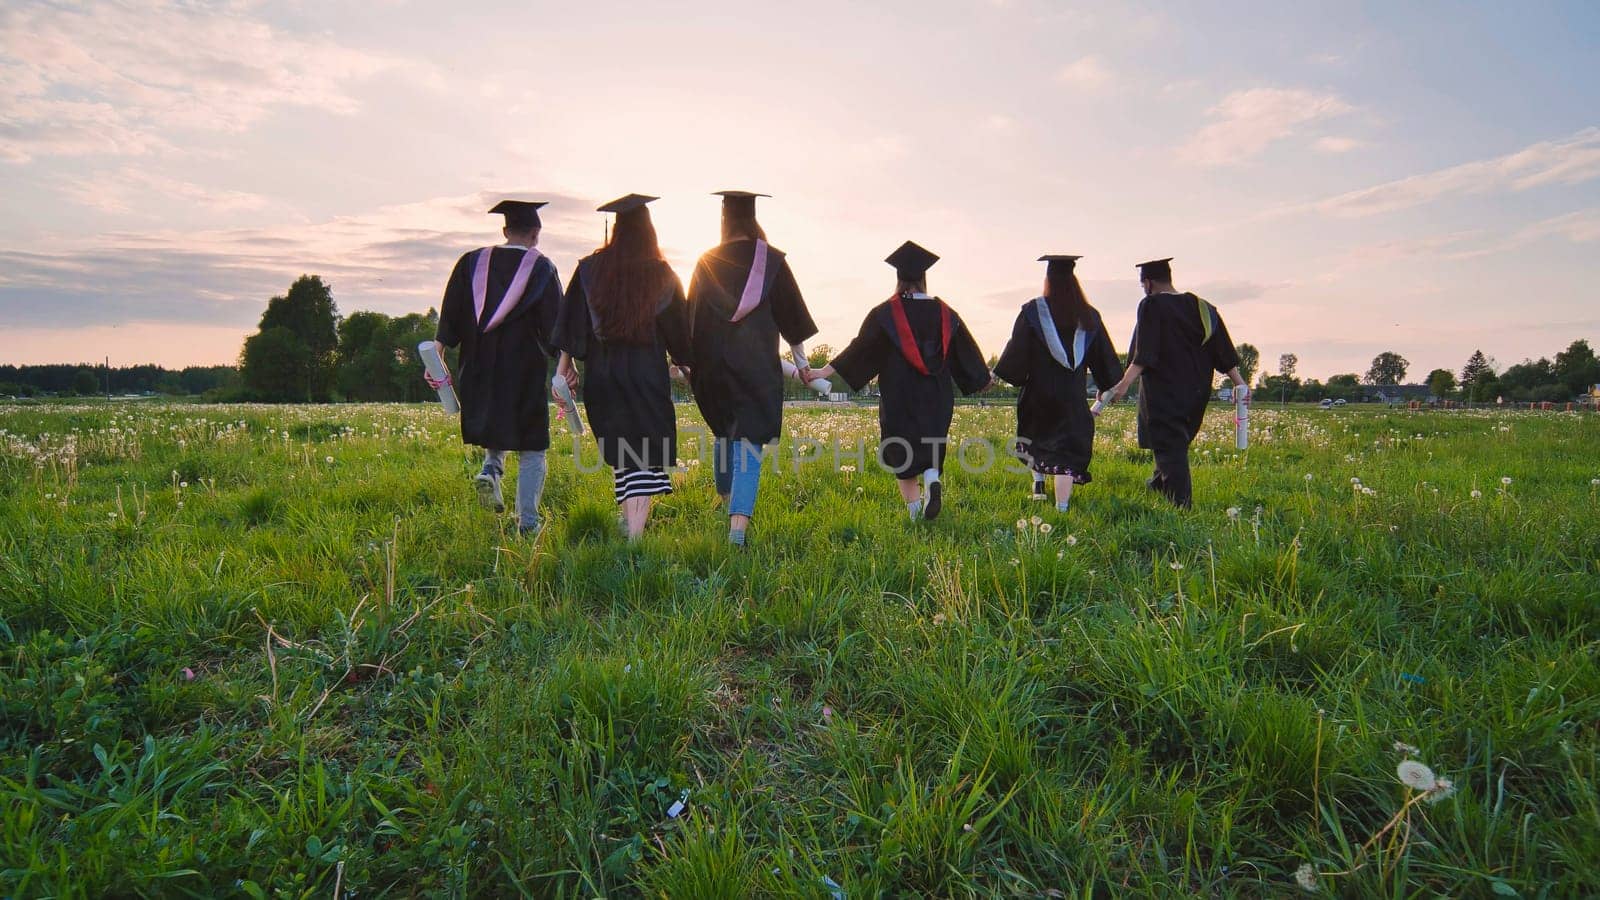 Six graduates in robes walk towards the sun